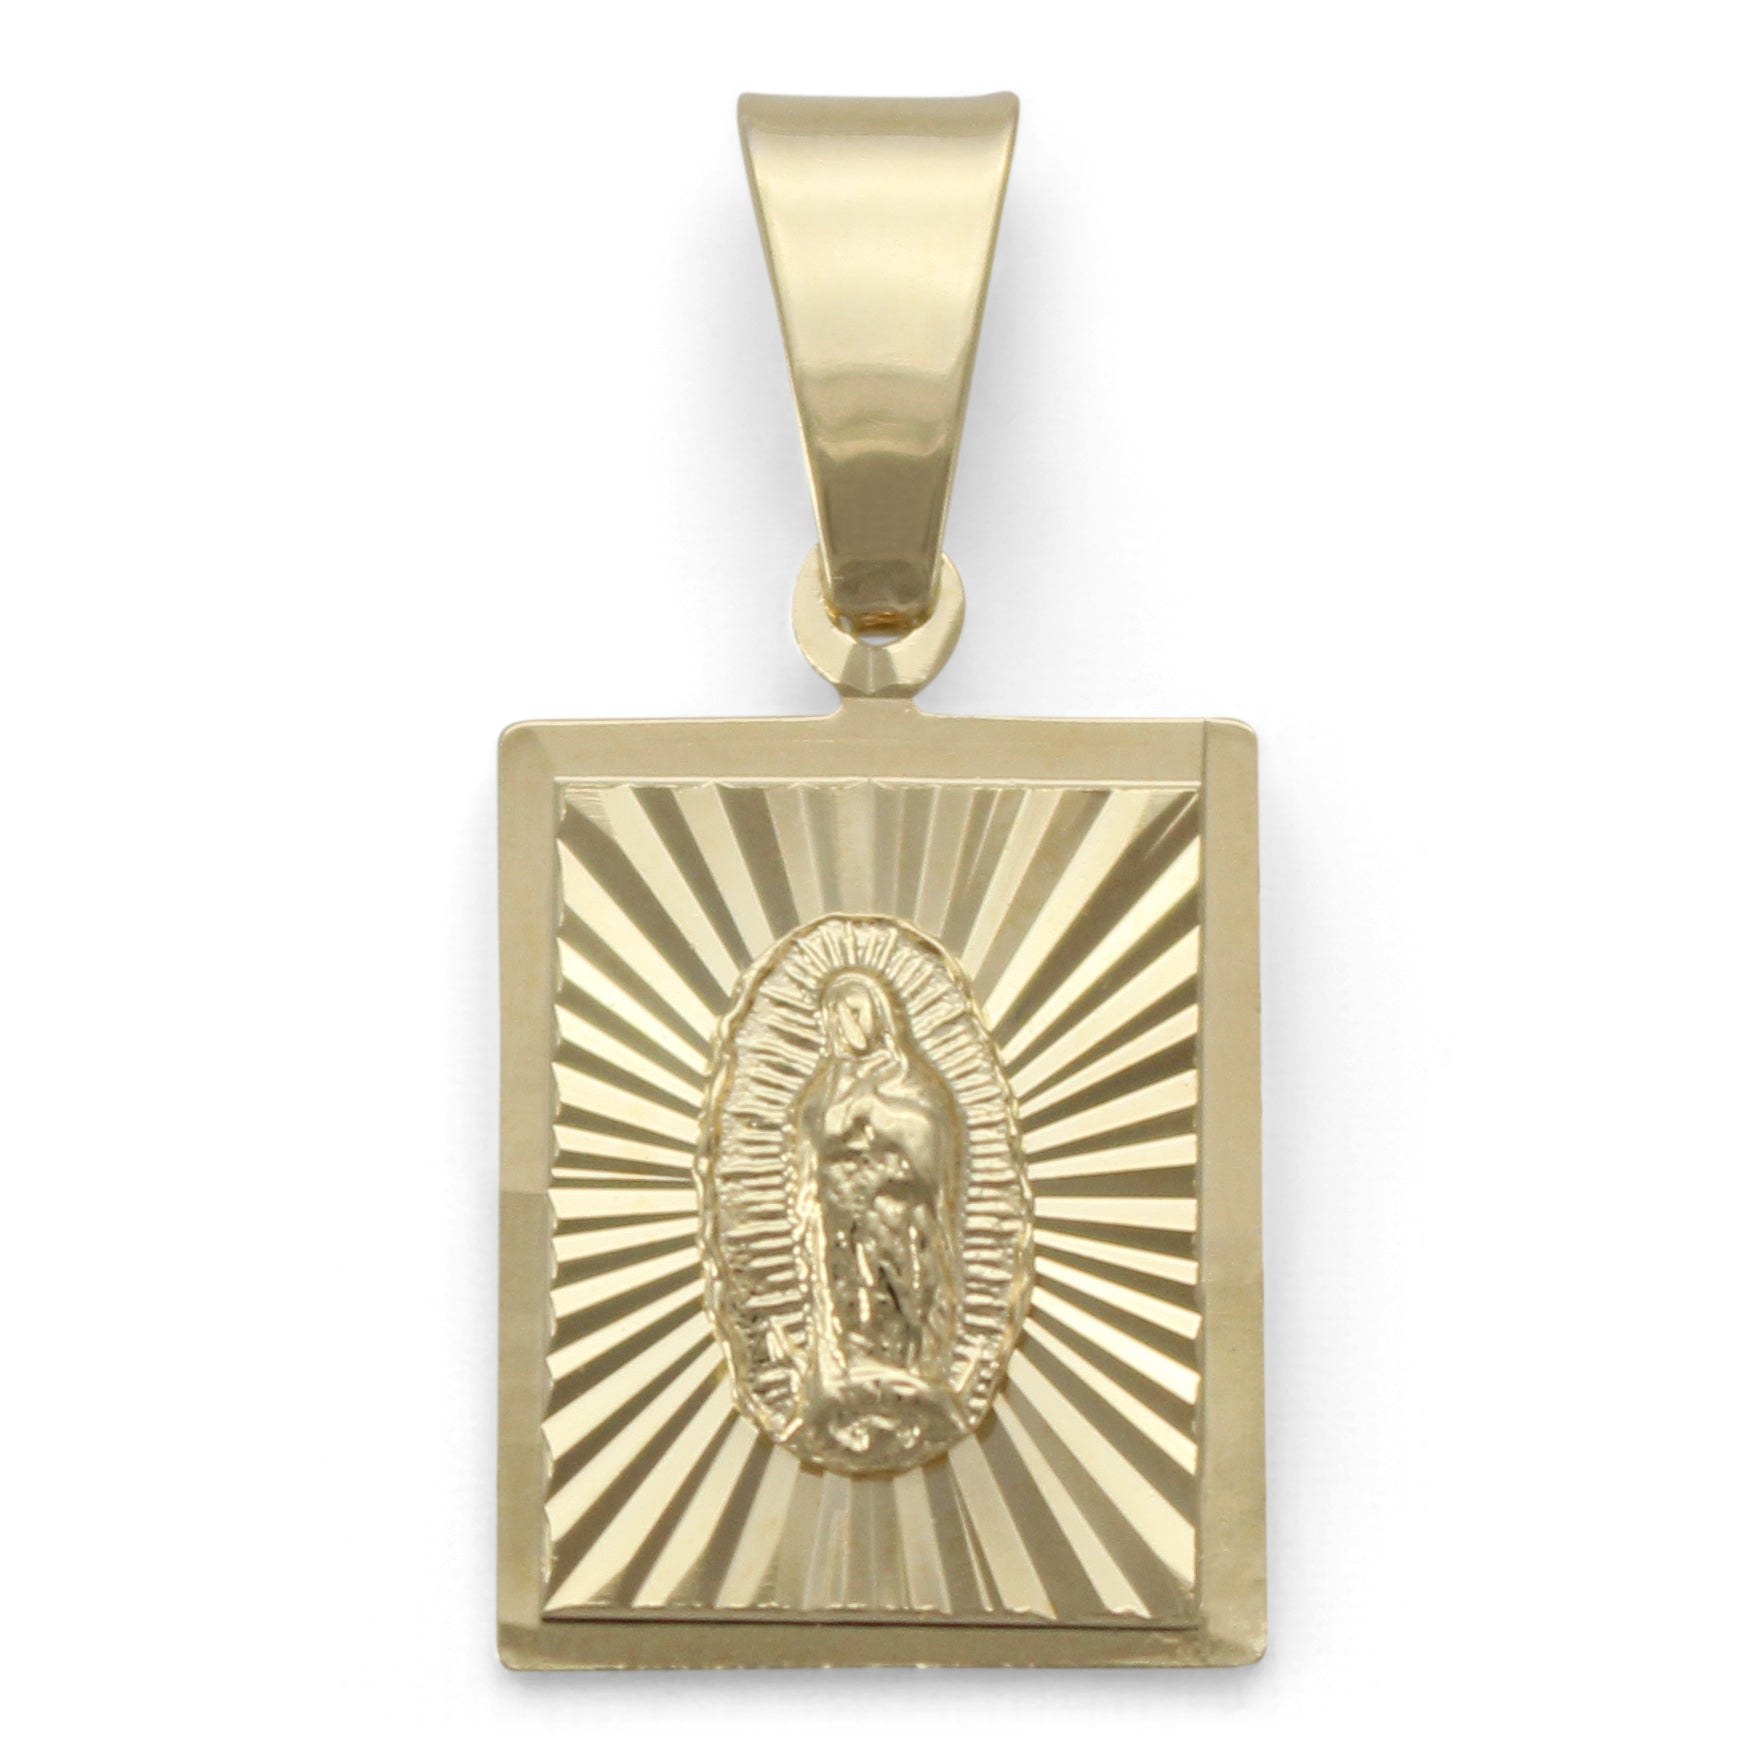 Medalla Virgen de Guadalupe rectangular en chapa de oro 14K